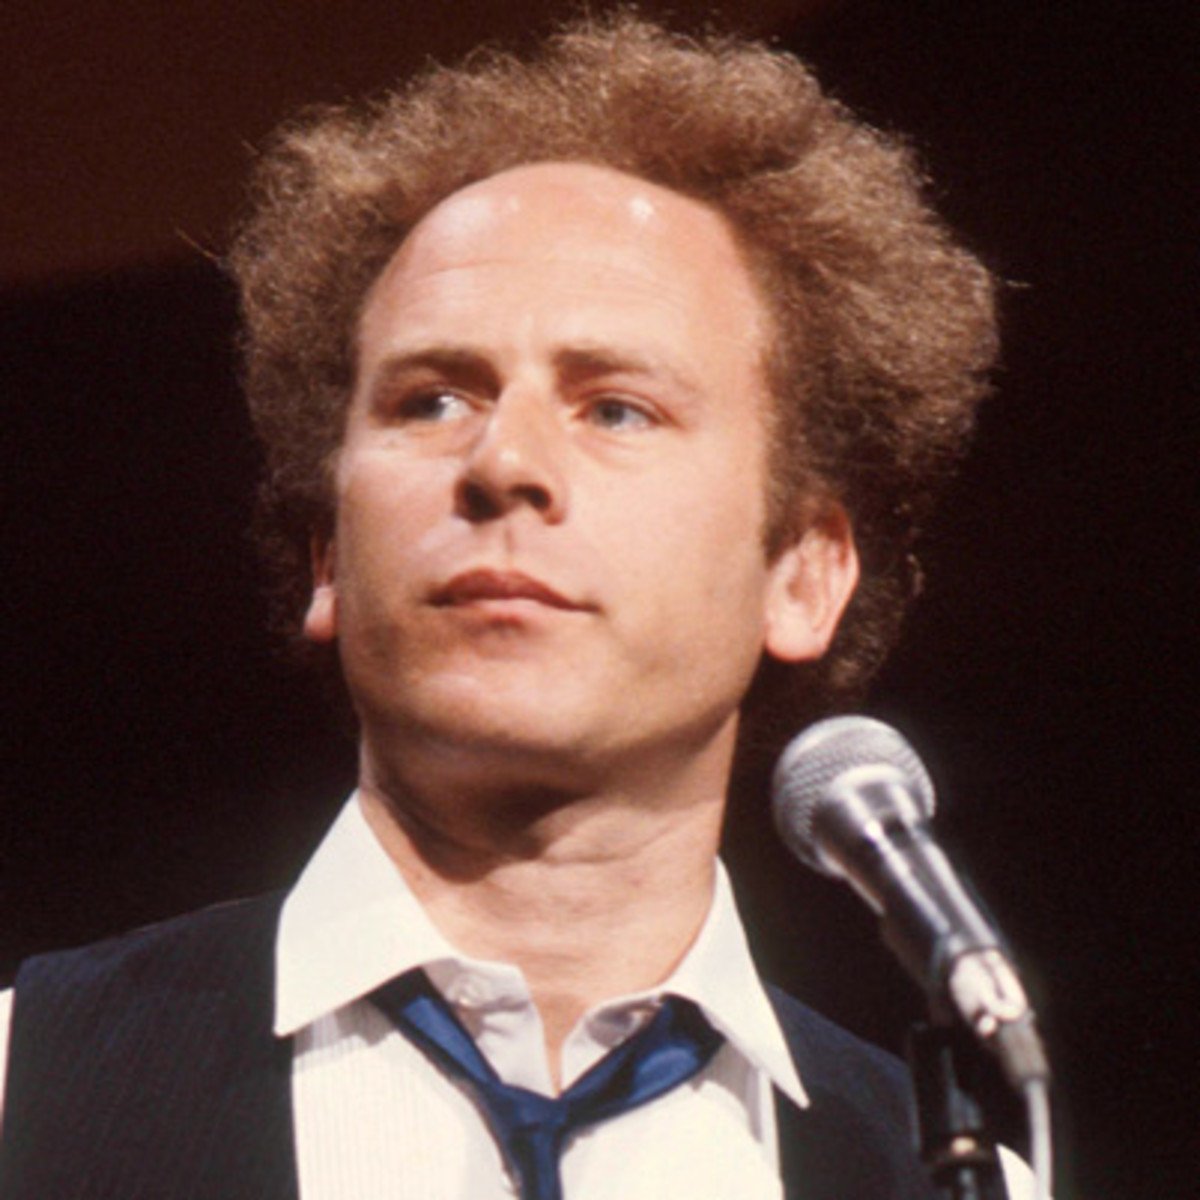 Happy birthday to Rock and Roll Hall of Famer, Art Garfunkel! 